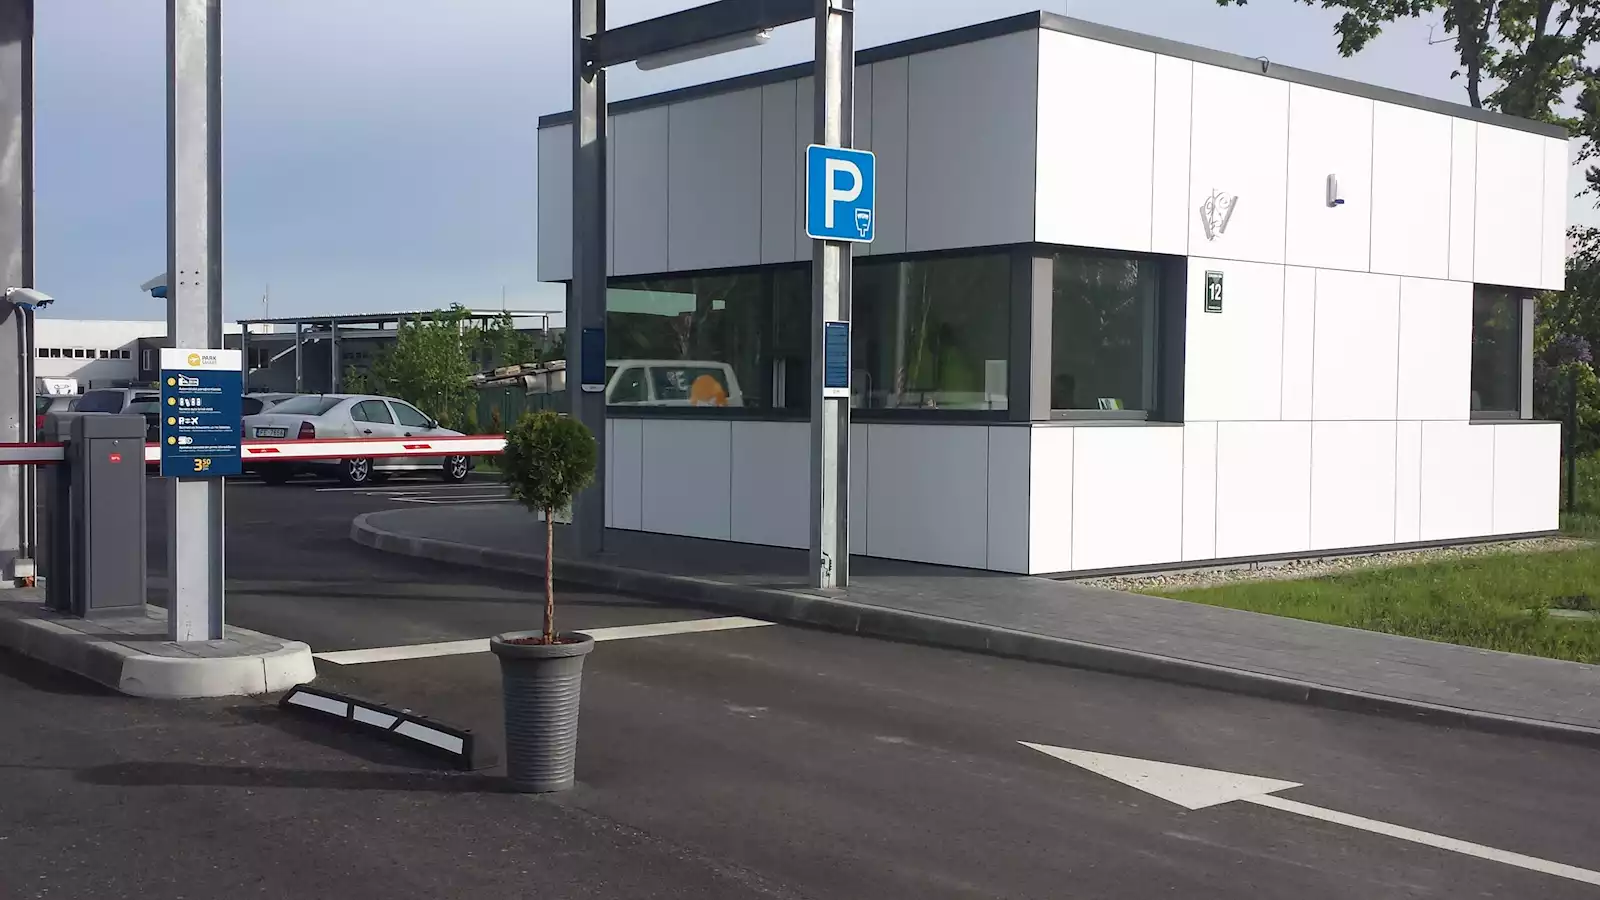 Park Smart Riga parking entrance